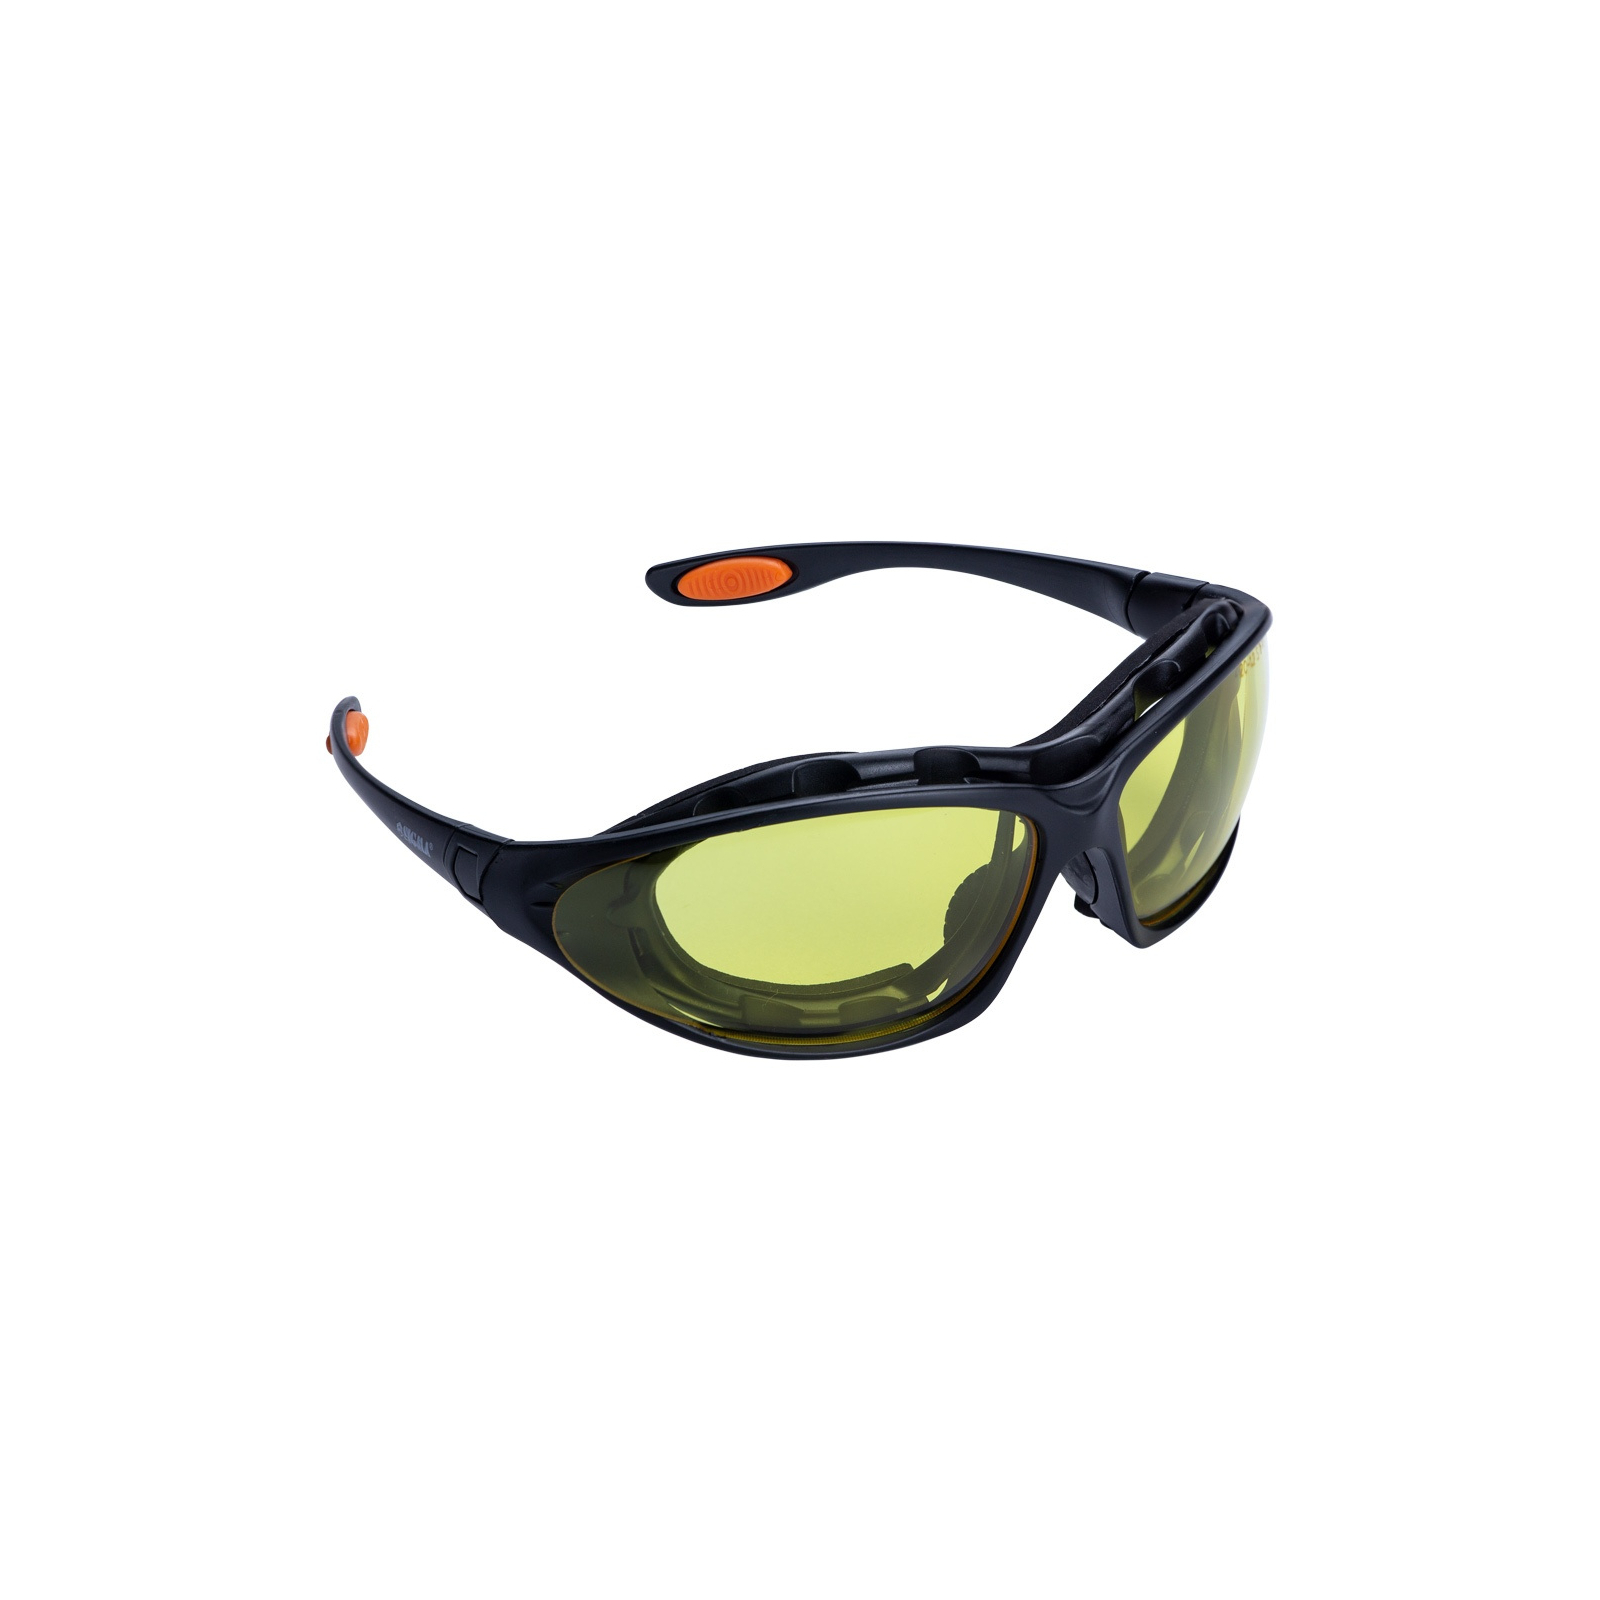 Защитные очки Sigma Super Zoom anti-scratch, anti-fog (9410921)